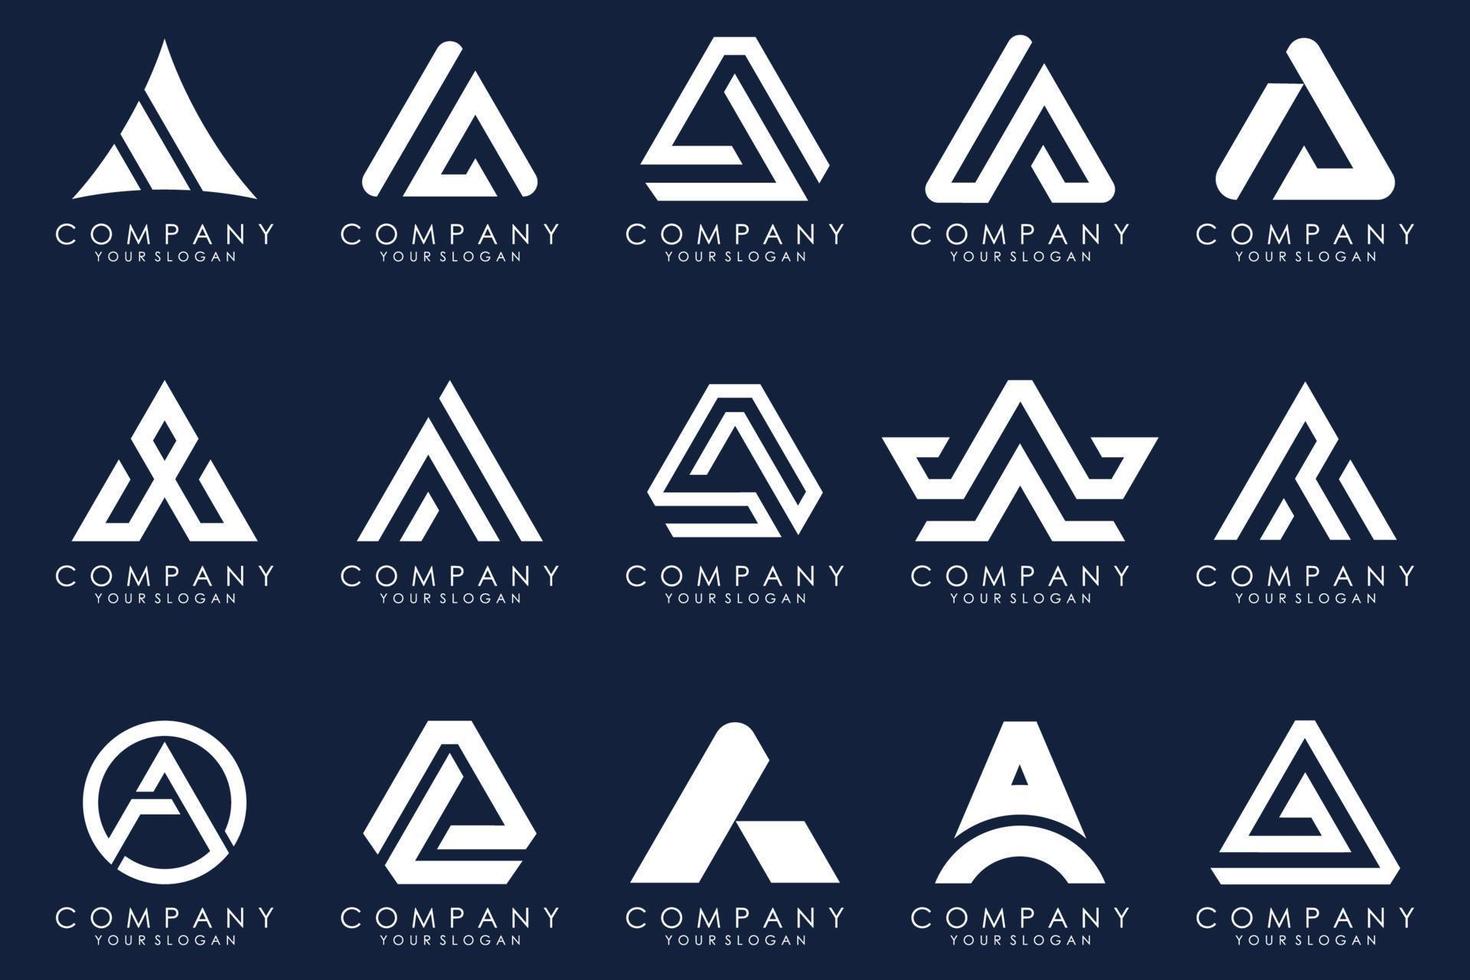 Letter A logo icon design template. vector